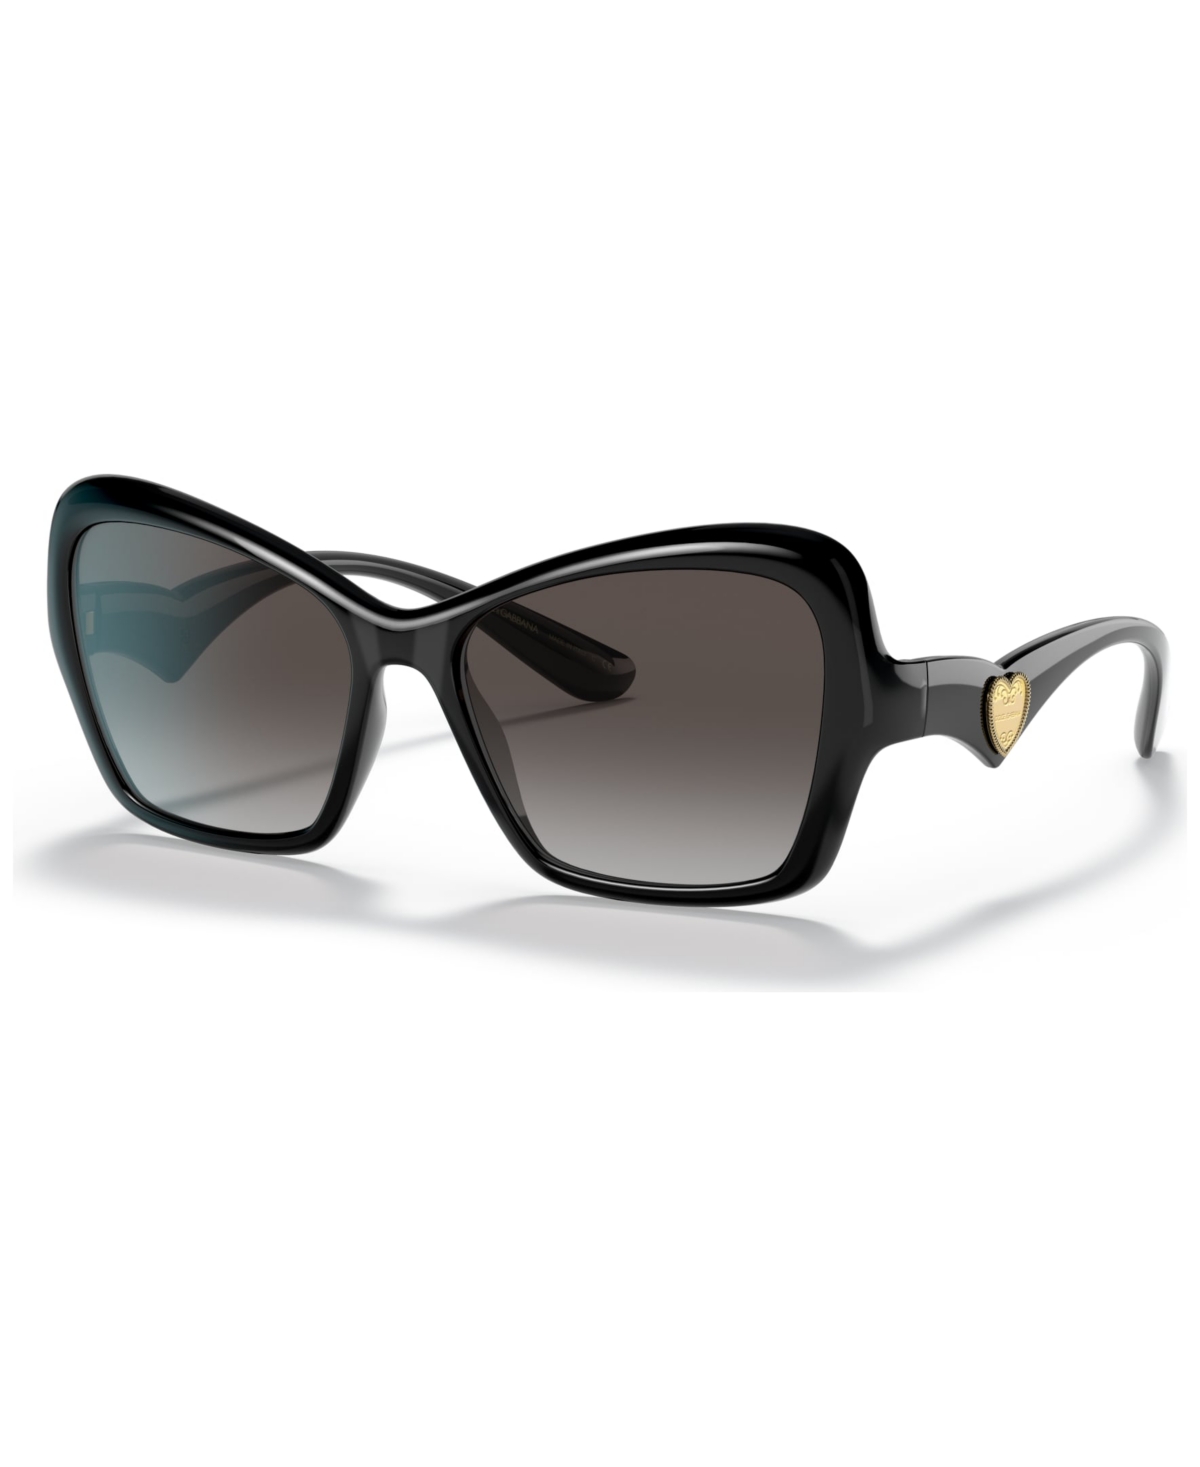 Dolce&Gabbana Women's Sunglasses, DG615355-y - Black